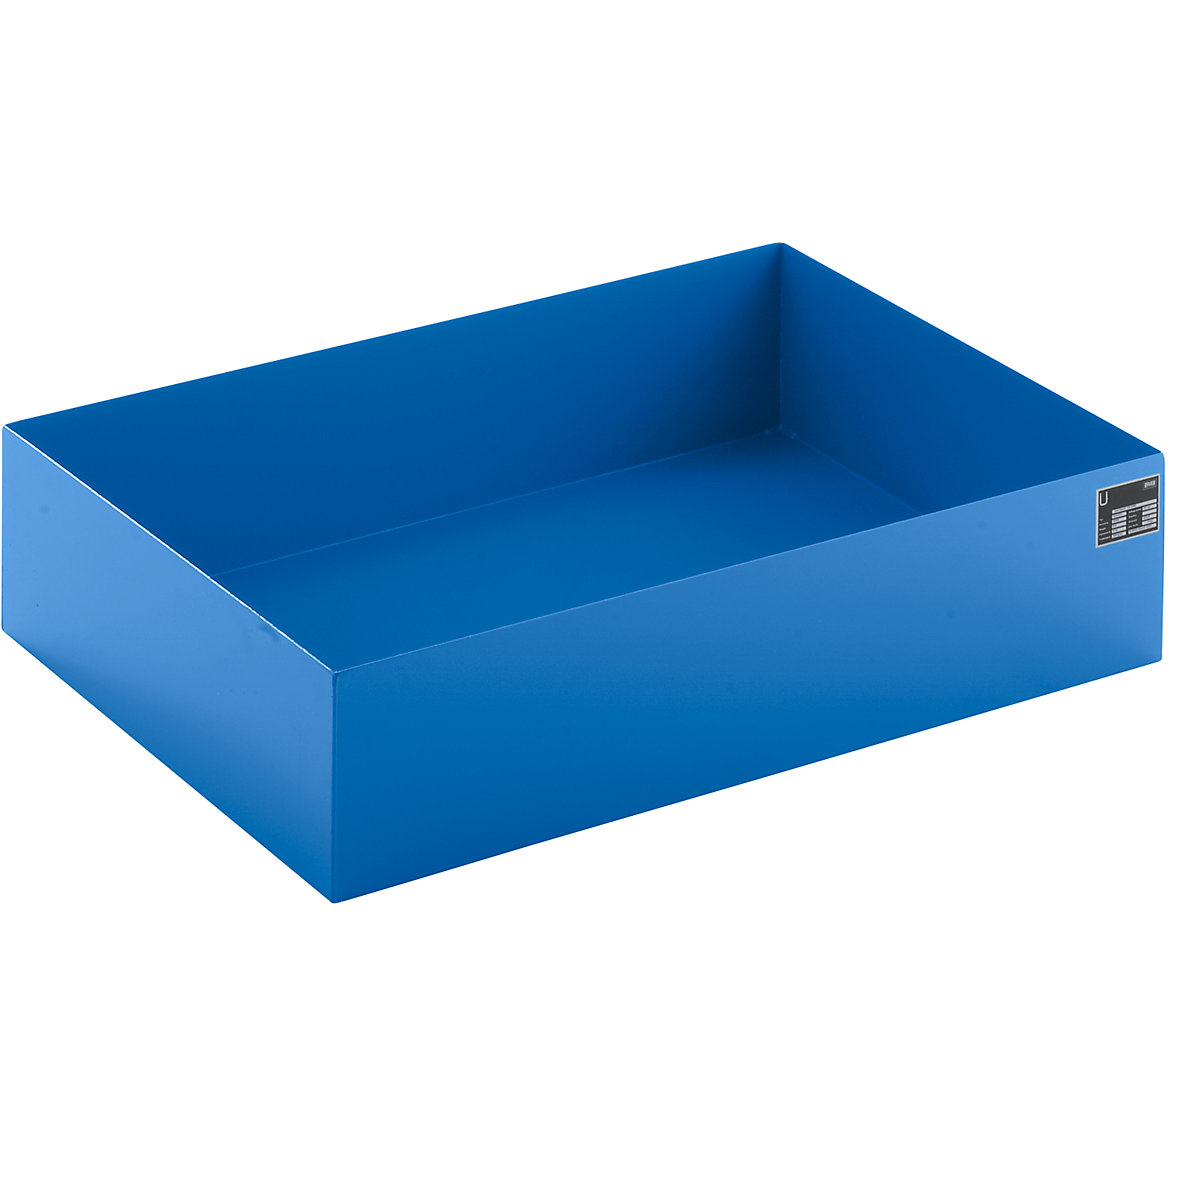 Paletten-Auffangwanne, LxBxH 1200 x 800 x 260 mm, blau RAL 5012